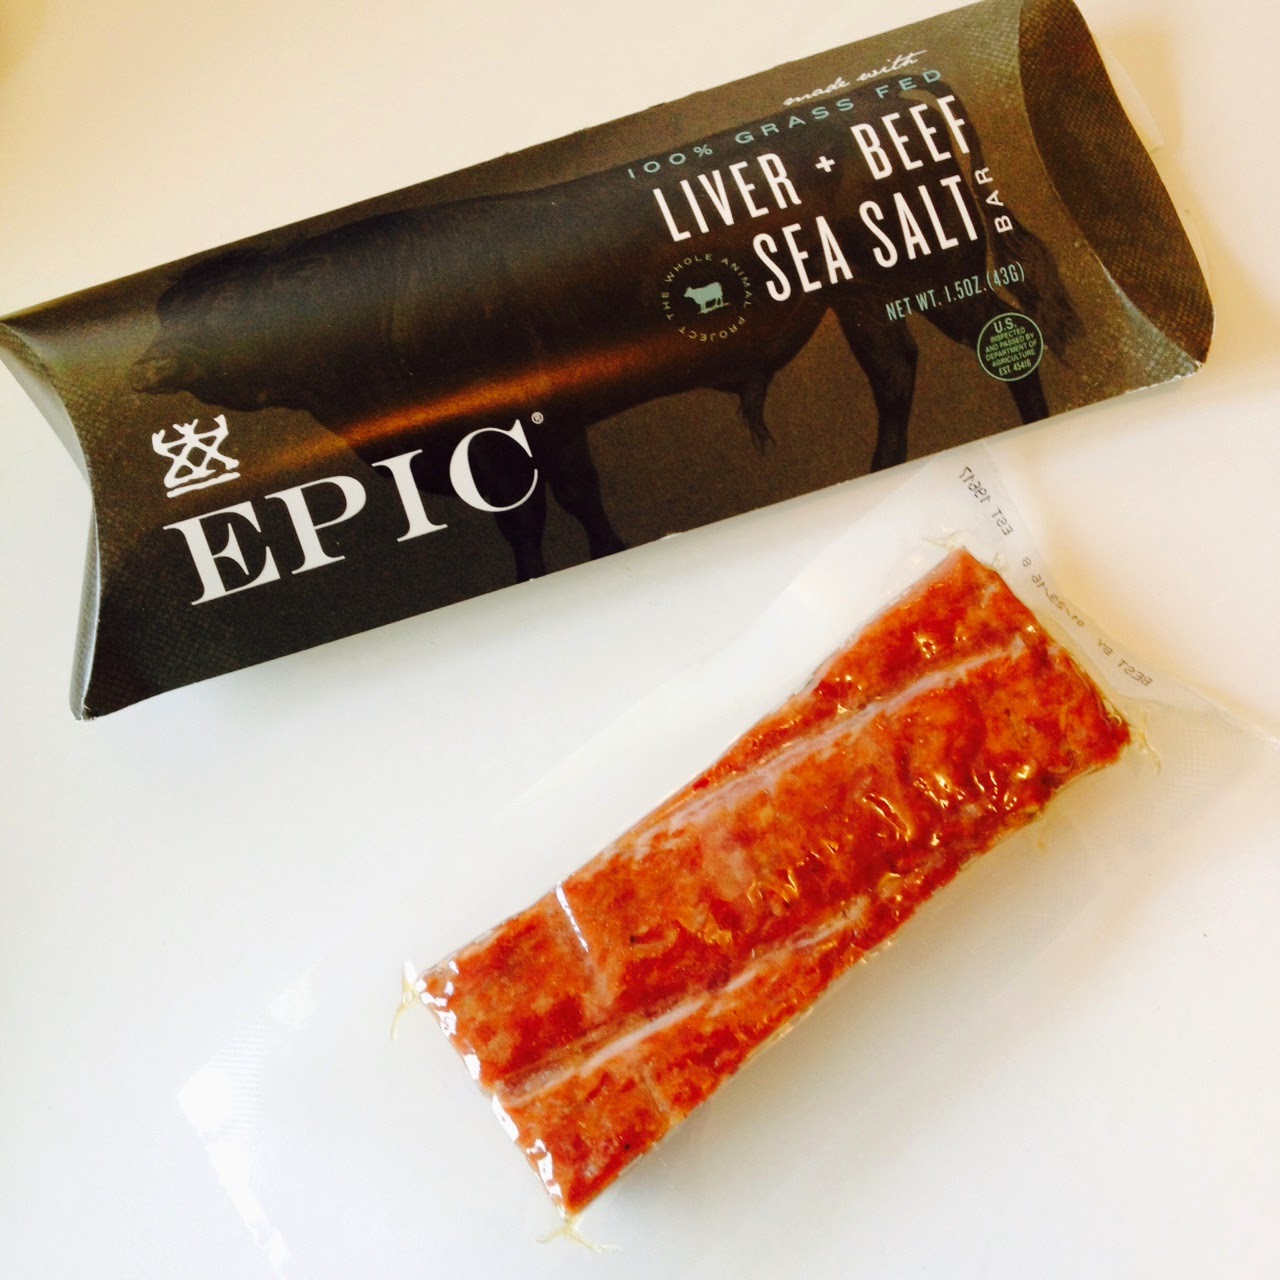 Epic bar beef liver and sea salt.